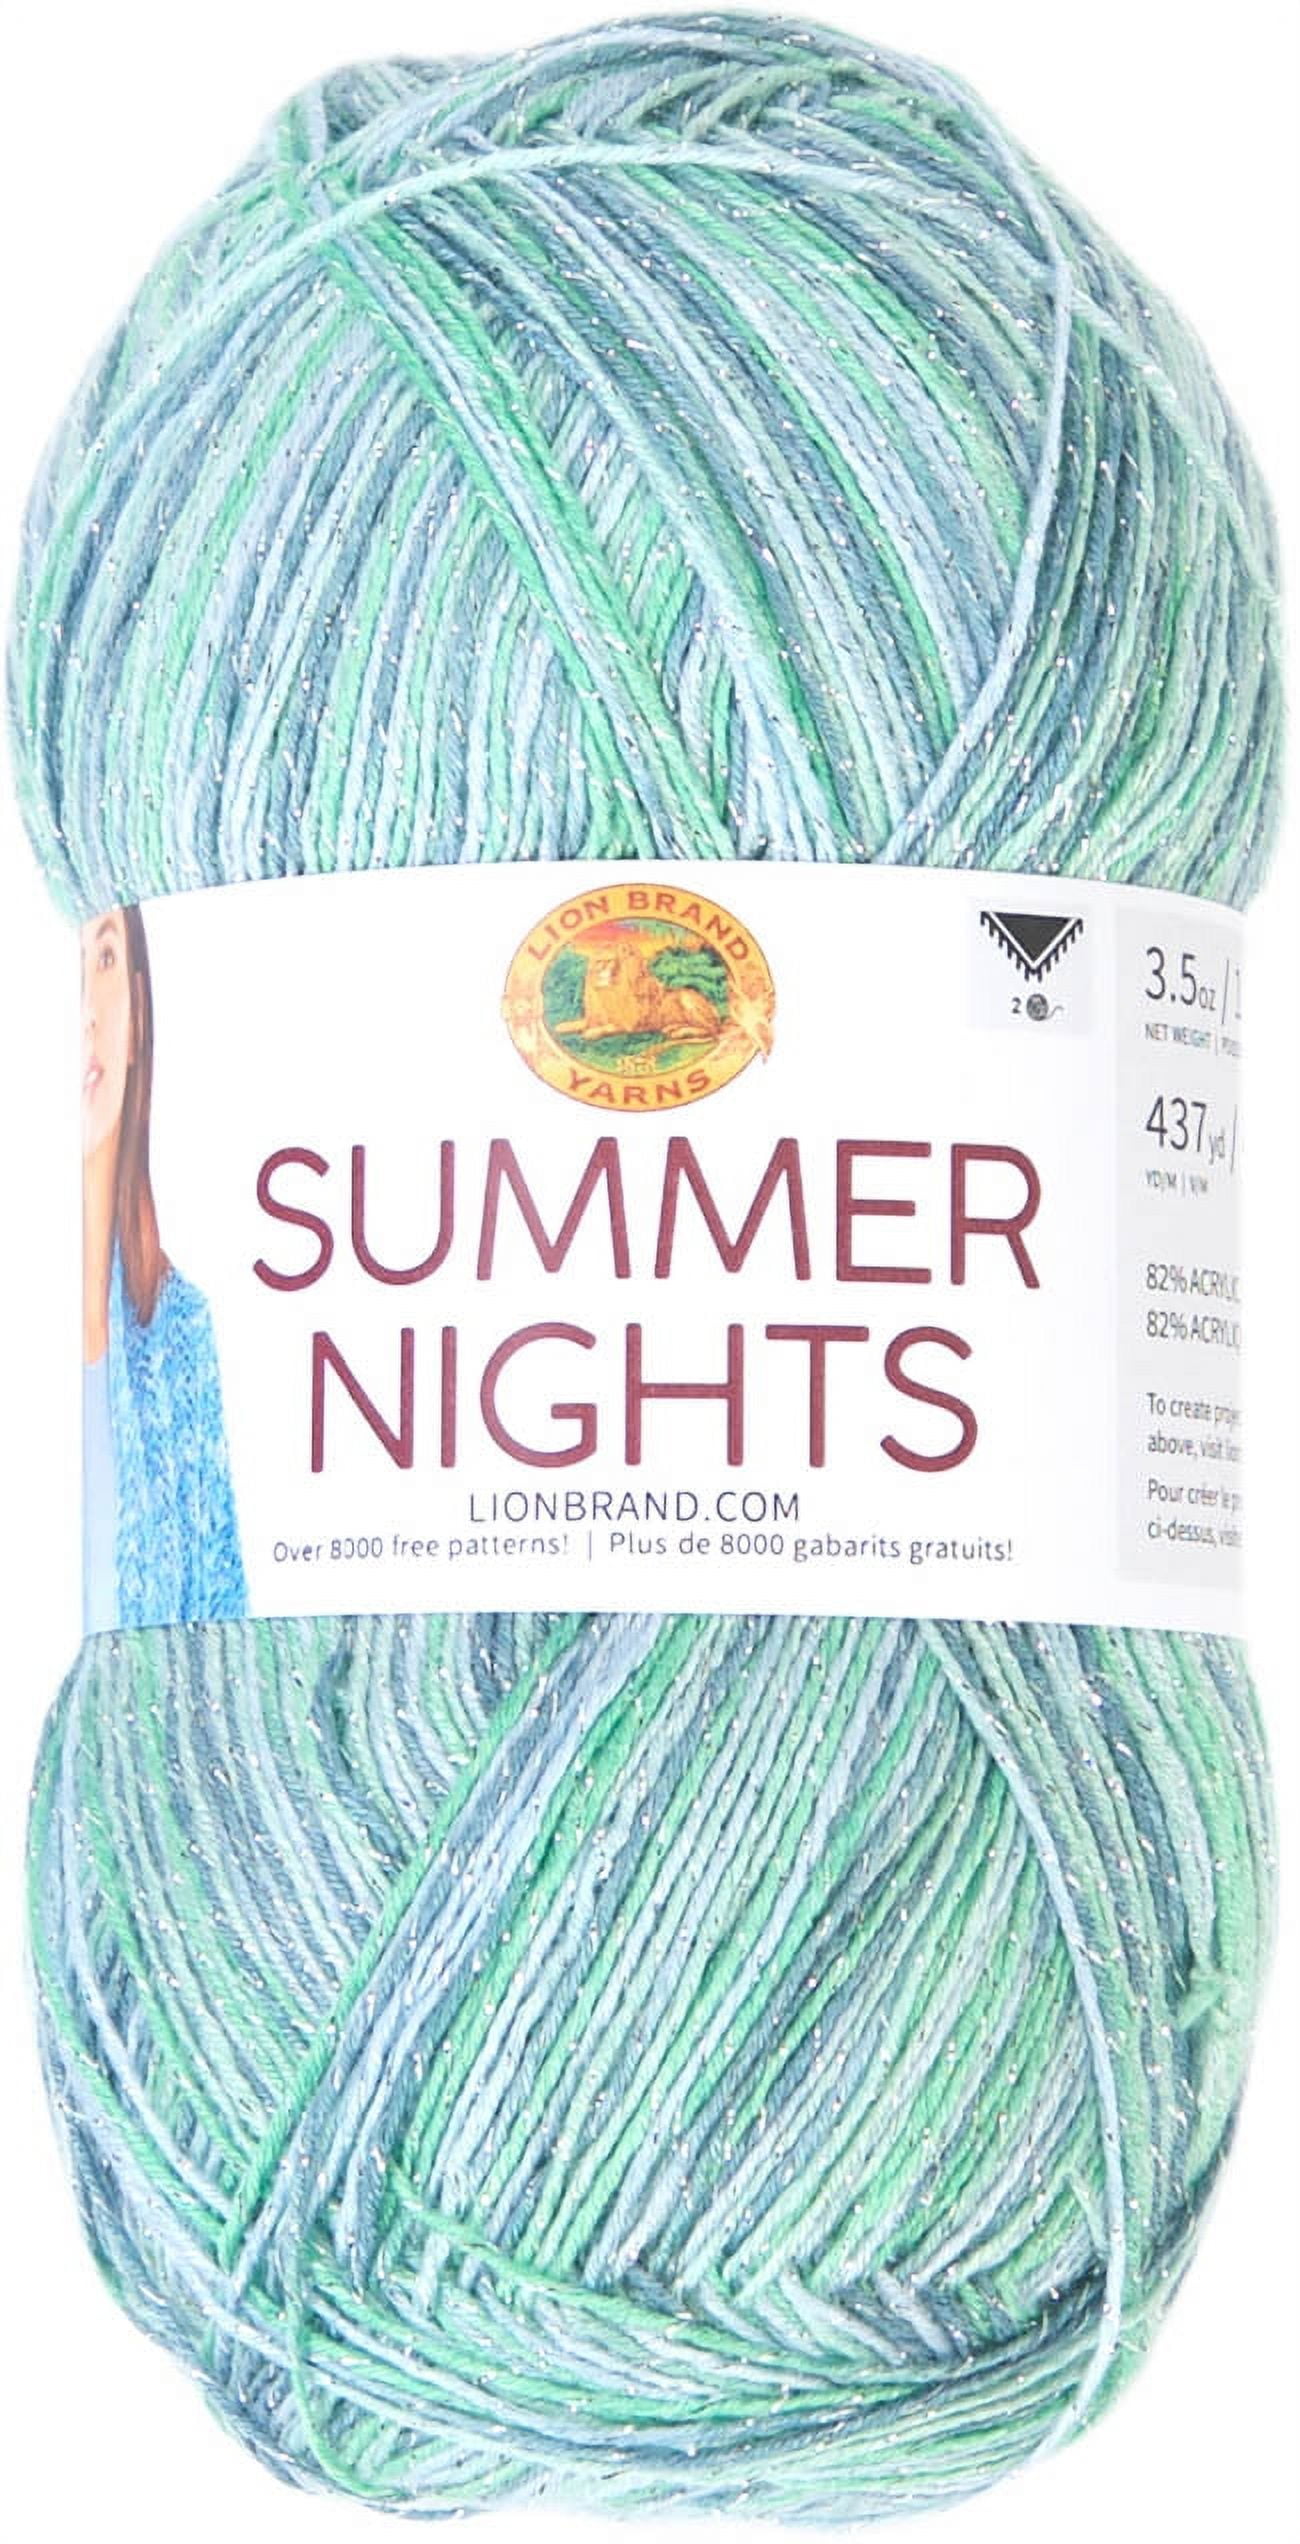 3 Pack) Lion Brand Yarn Summer Nights Yarn, Ocean Cove : : Home